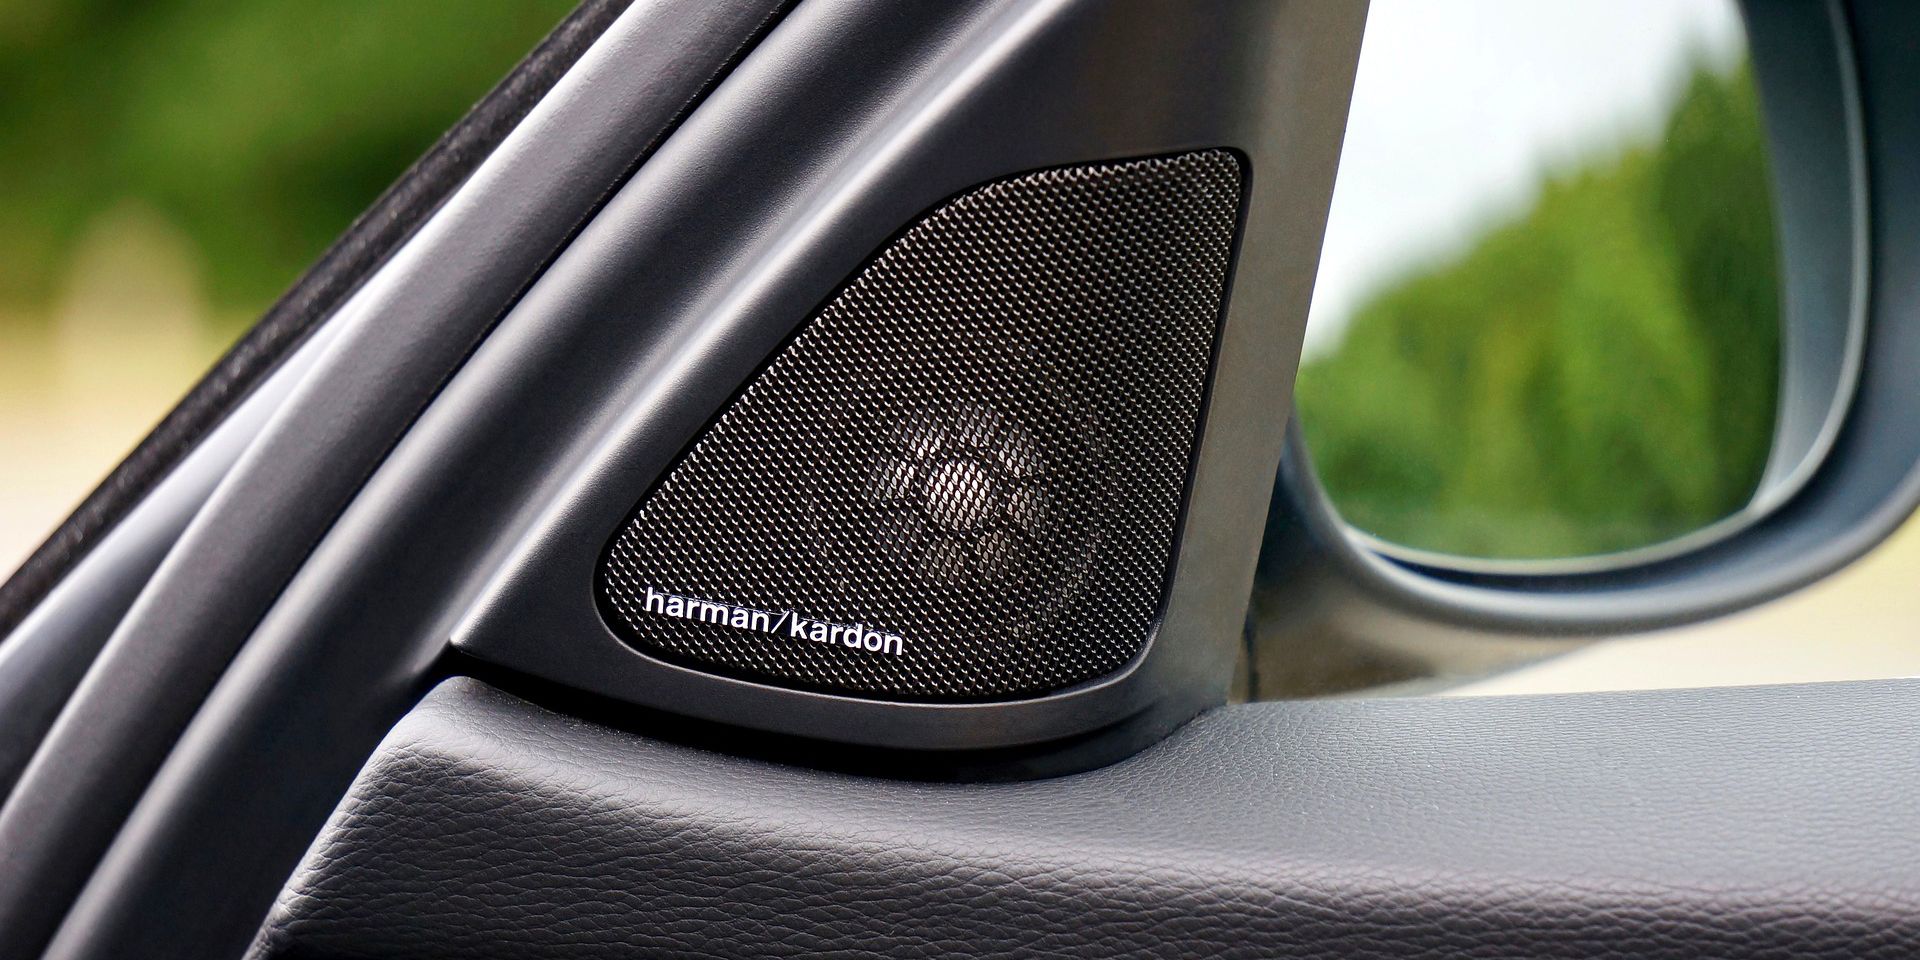 harmon kardon car speaker image